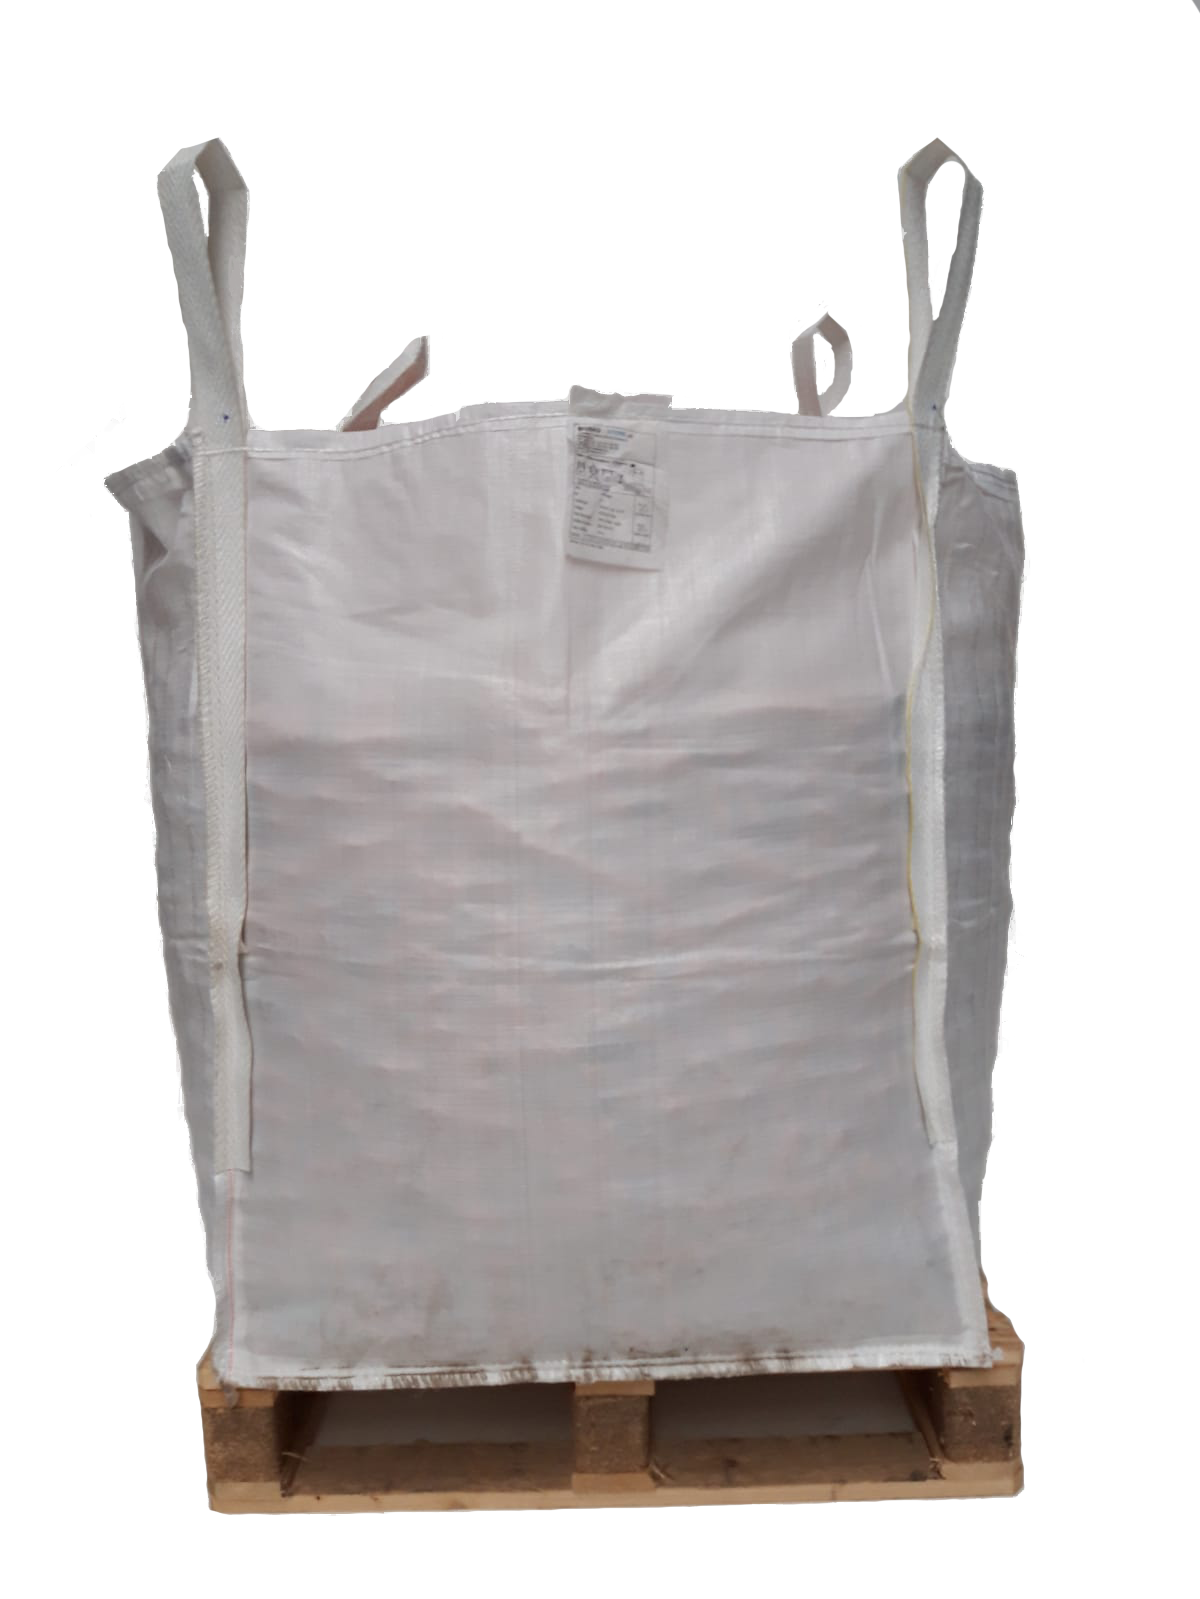 Bags BIGBAGS Säcke 500kg #12 * 6 Stück BIG BAG 108 cm hoch Versandkostenfrei 